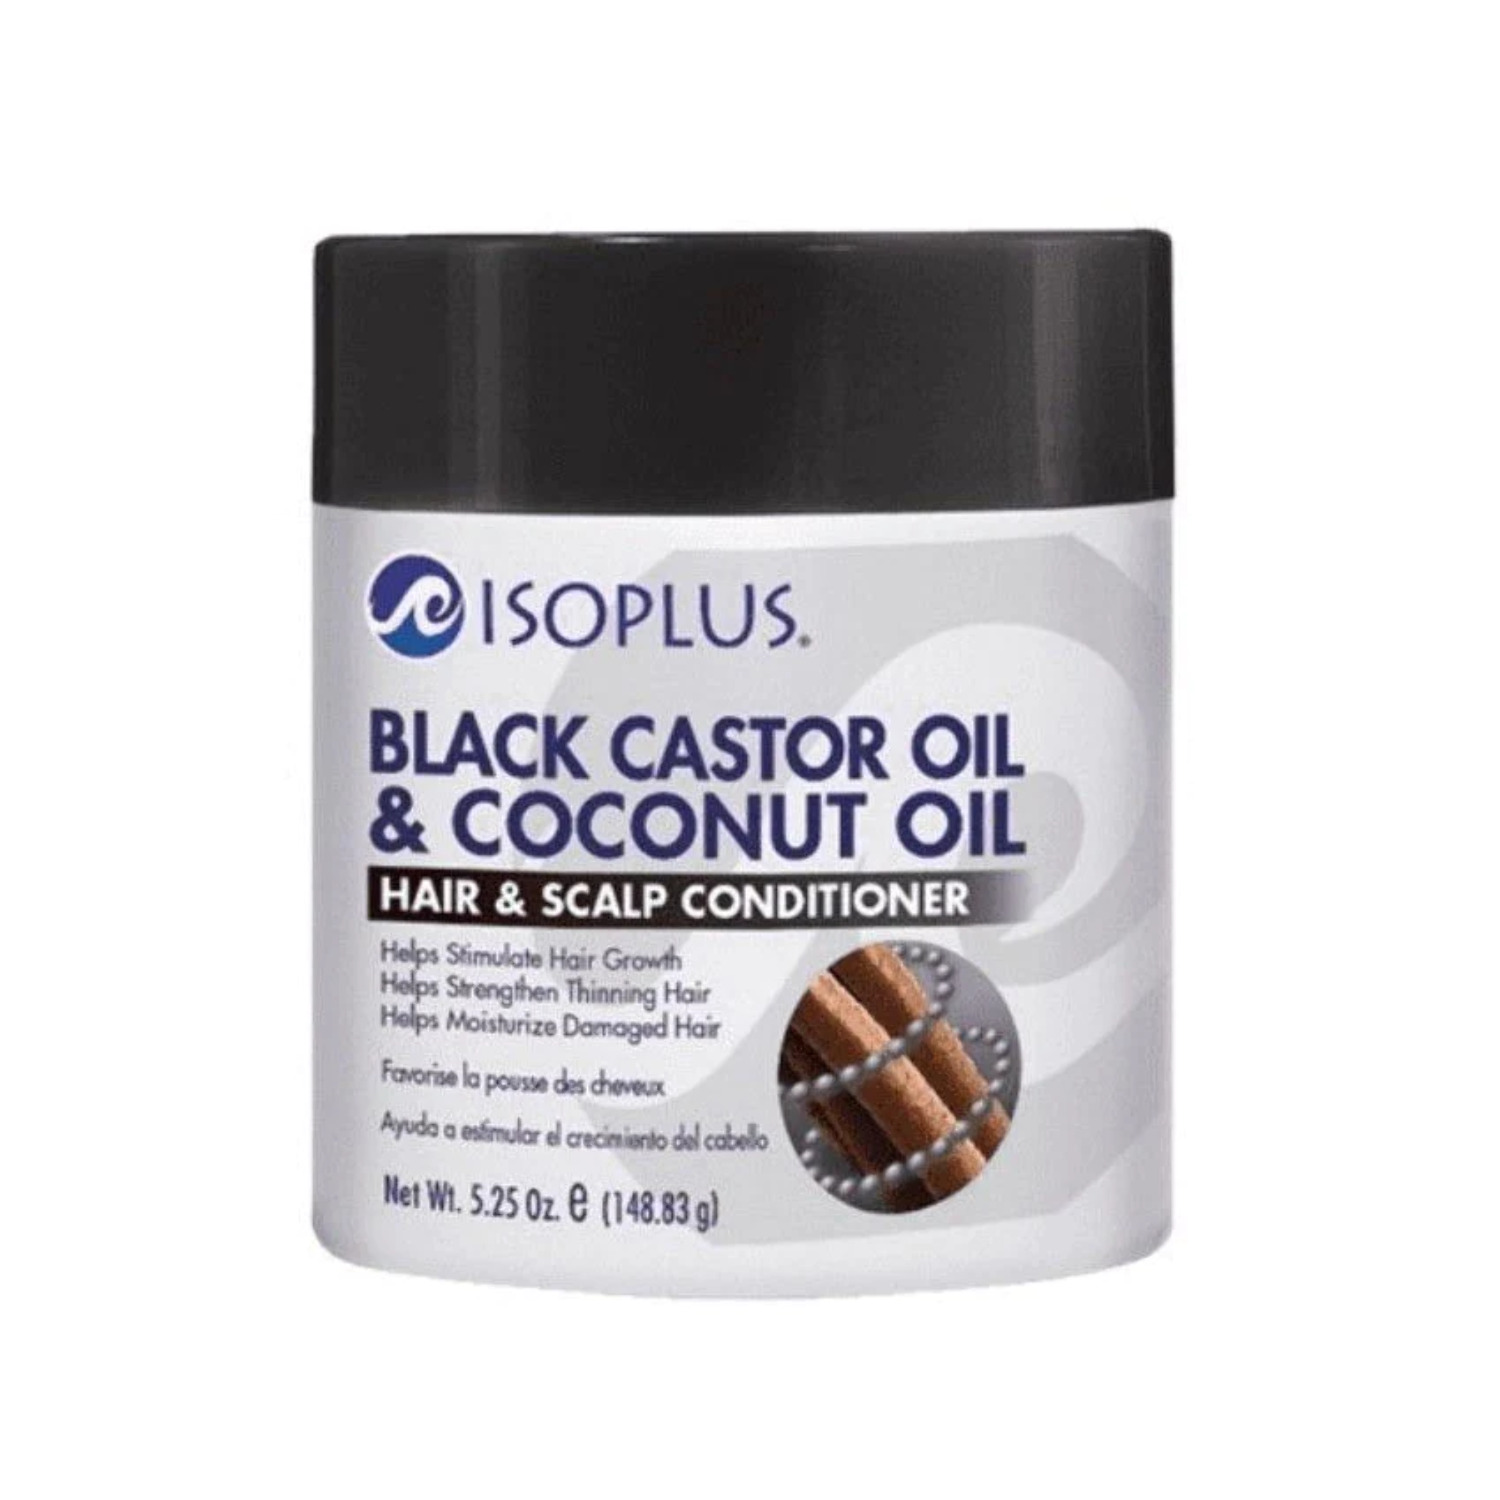 ISOPLUS - Black Castor Oil  Coconut Oil Hair  Scalp Conditioner - image 1 of 1